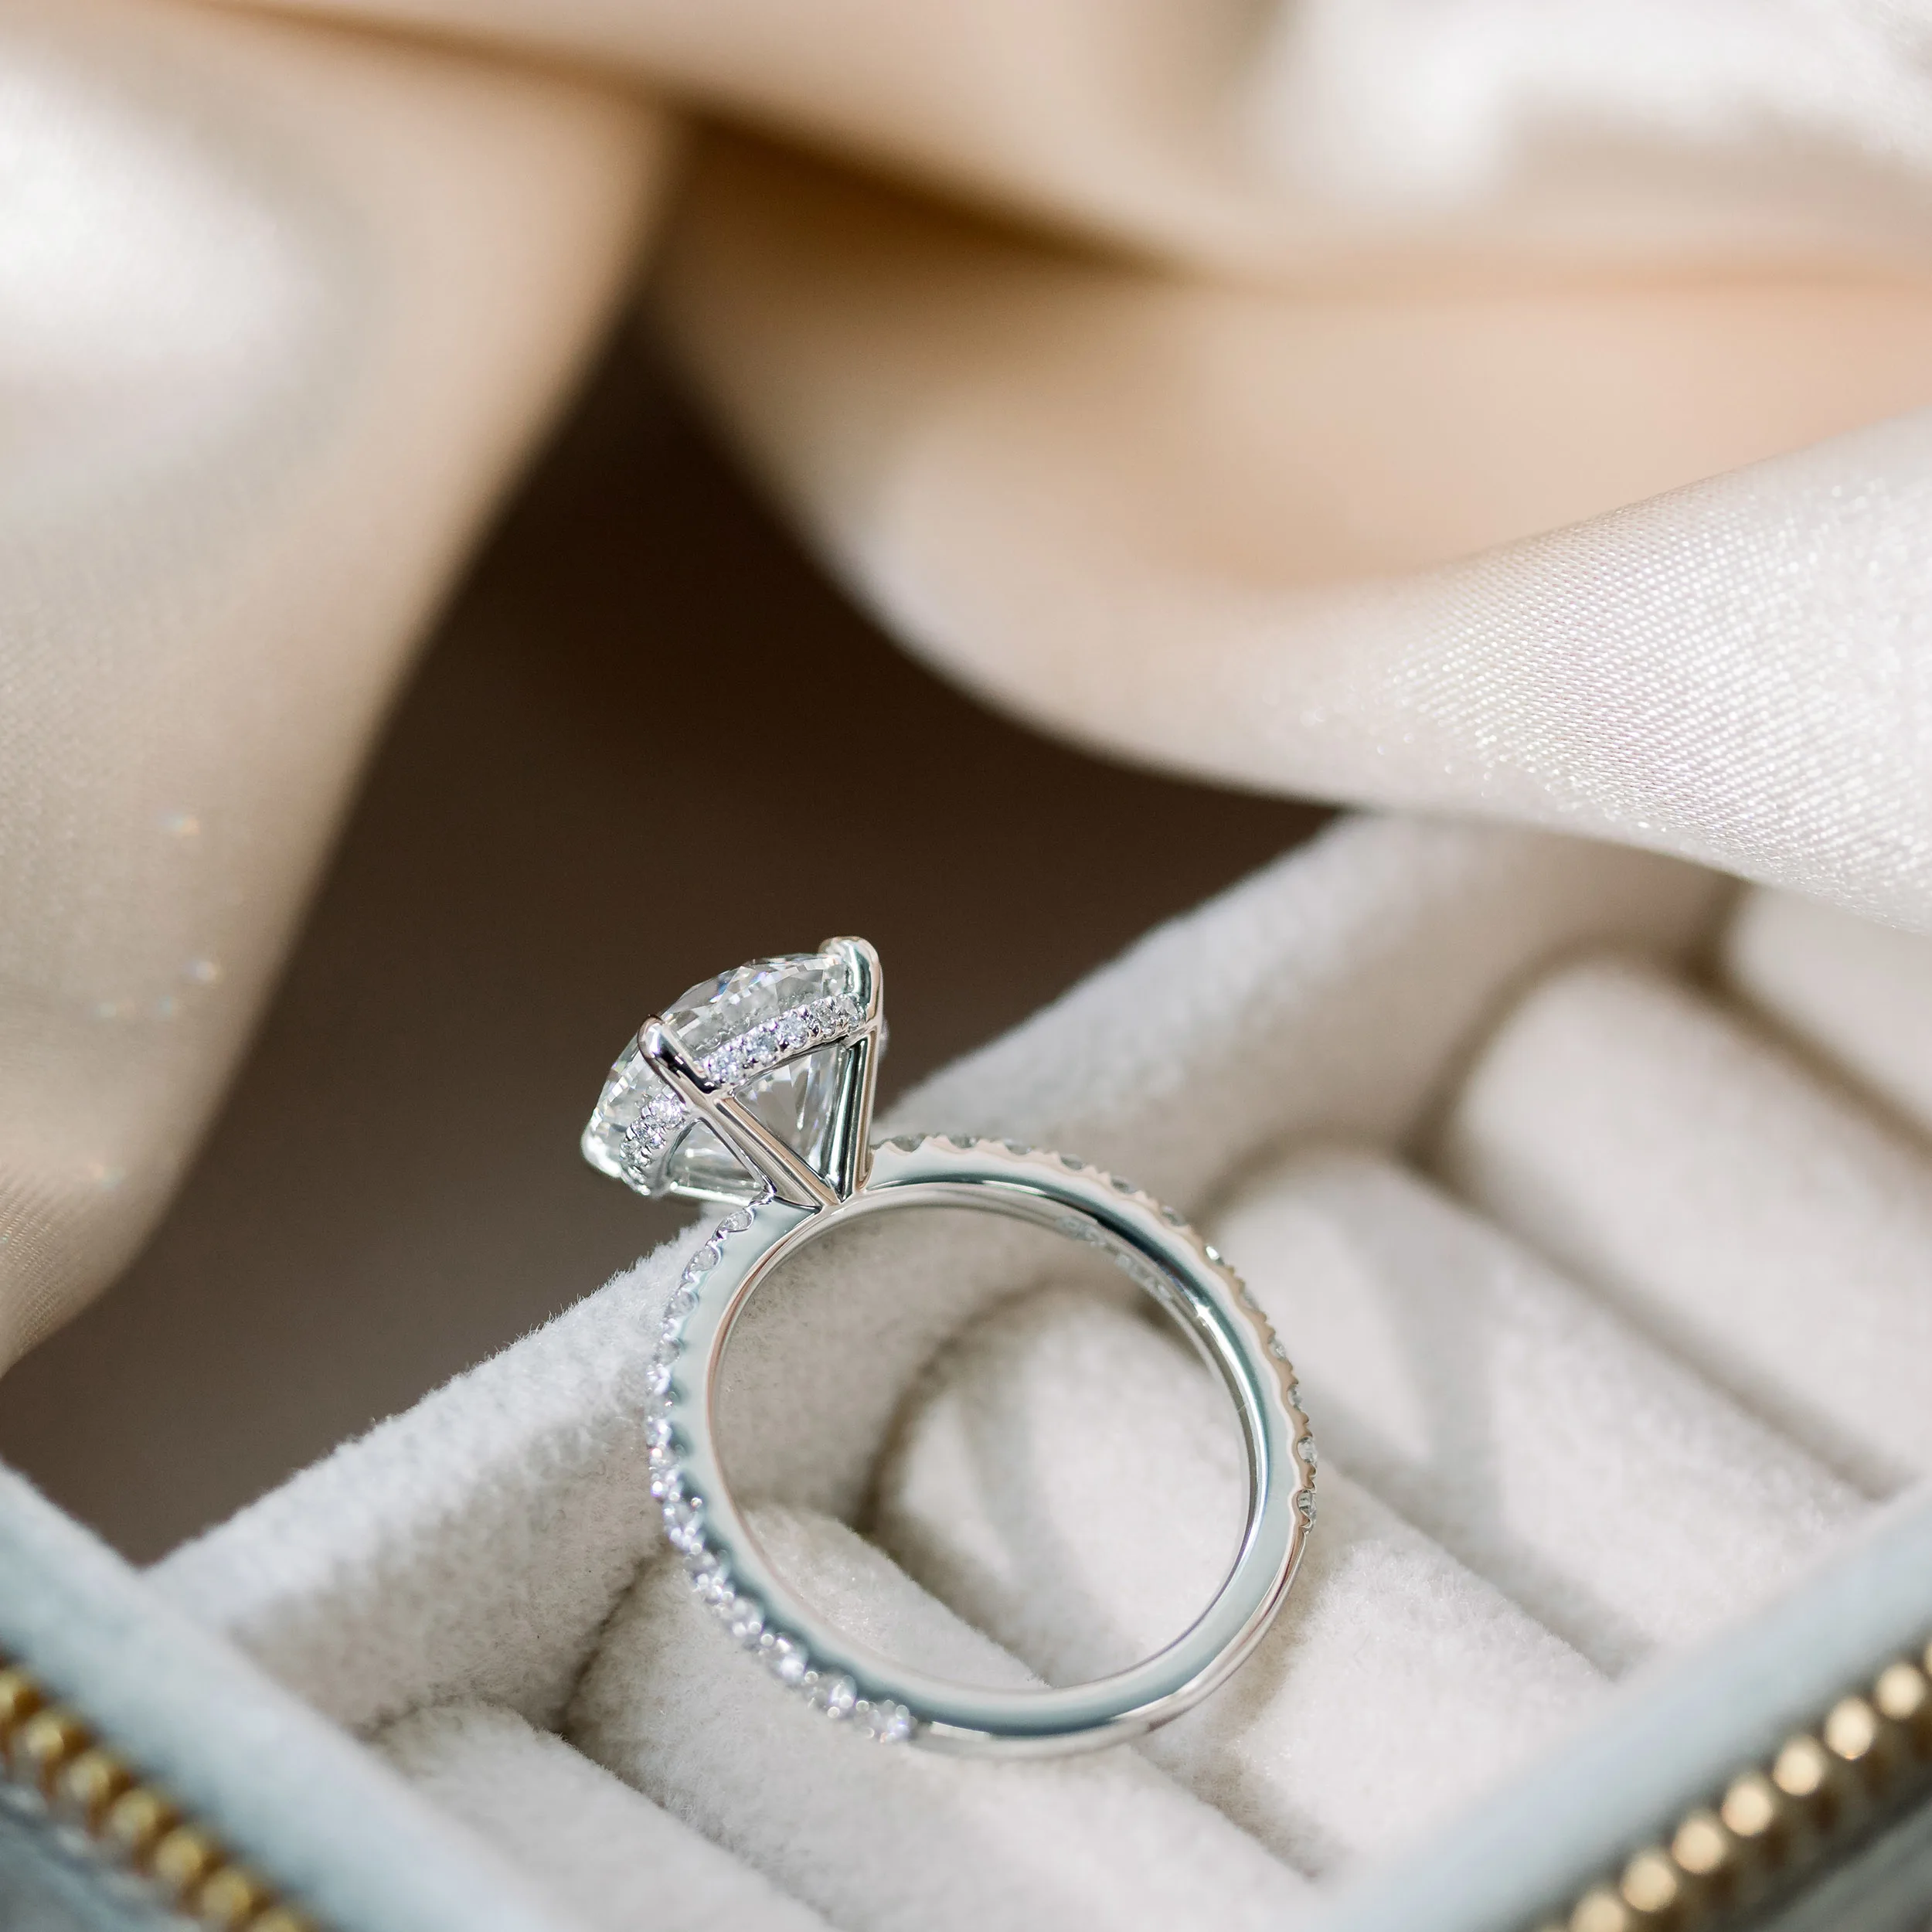 3.25 ct Diamonds set in Platinum Round Petite Four Prong Pavé Diamond Engagement Ring (Profile View)